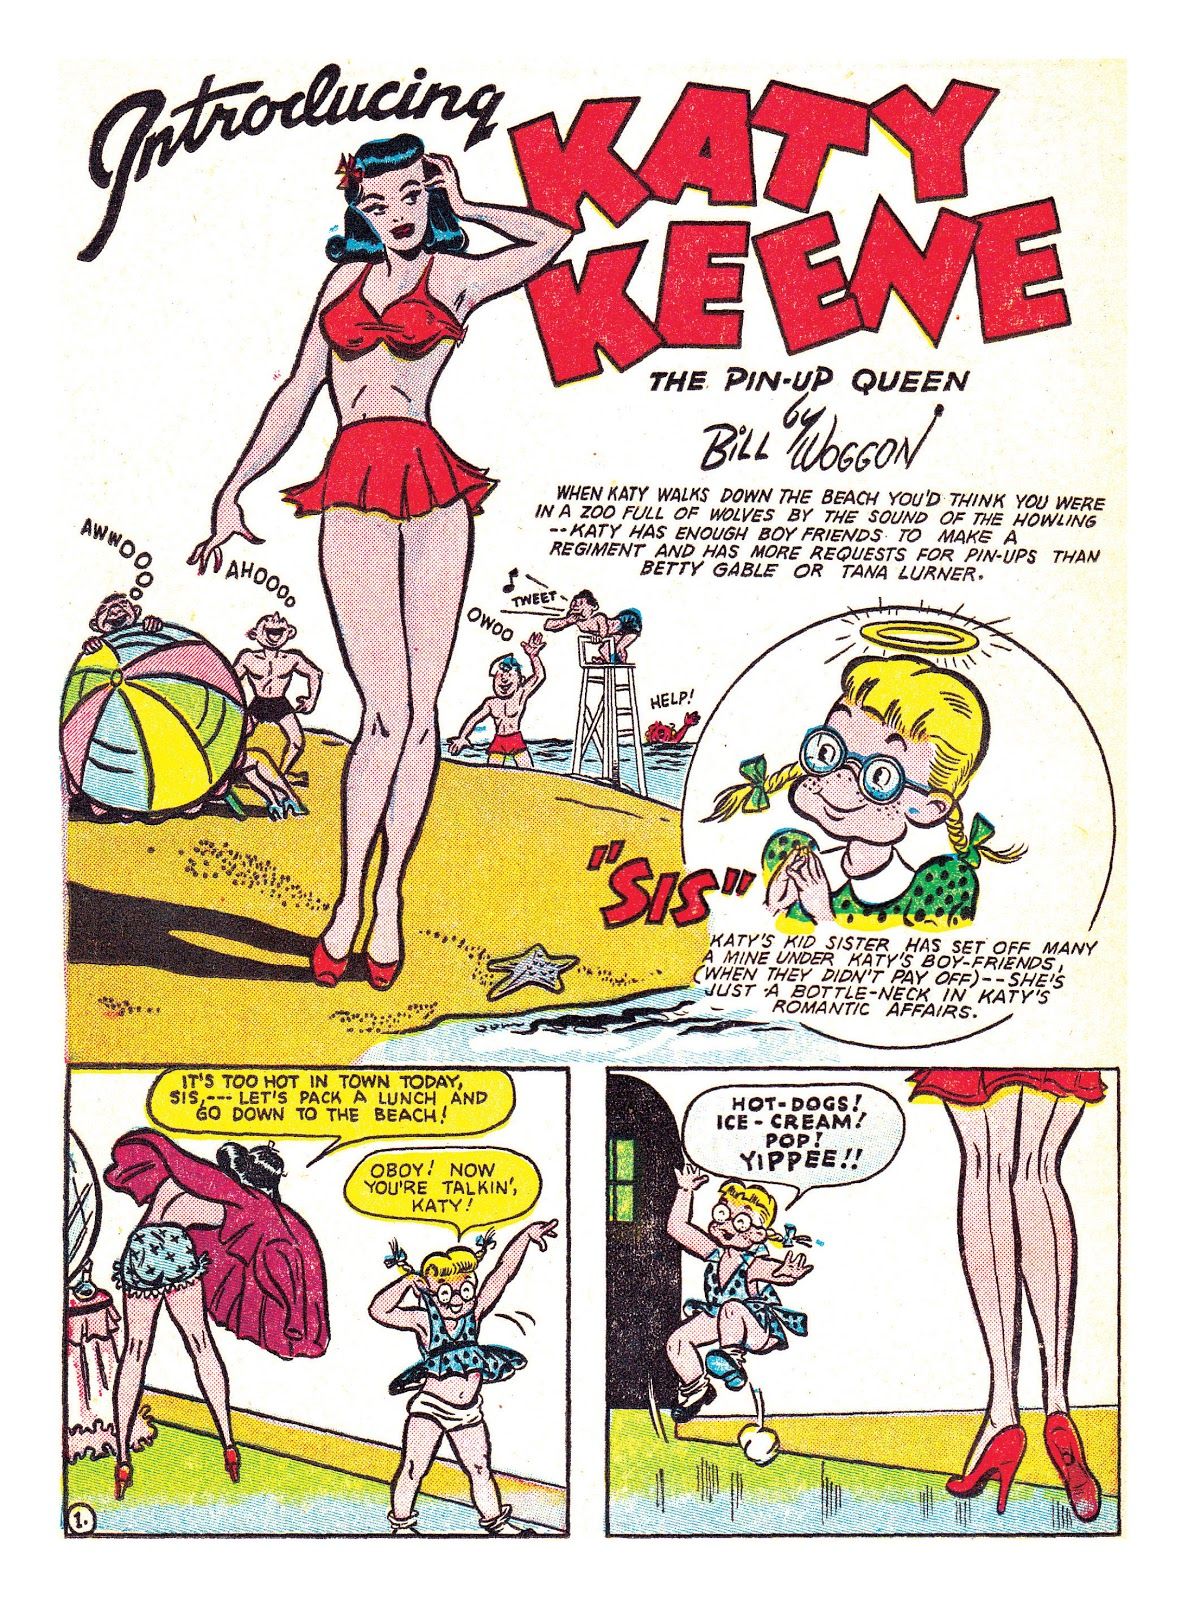 Katy Keene makes her comic book debut